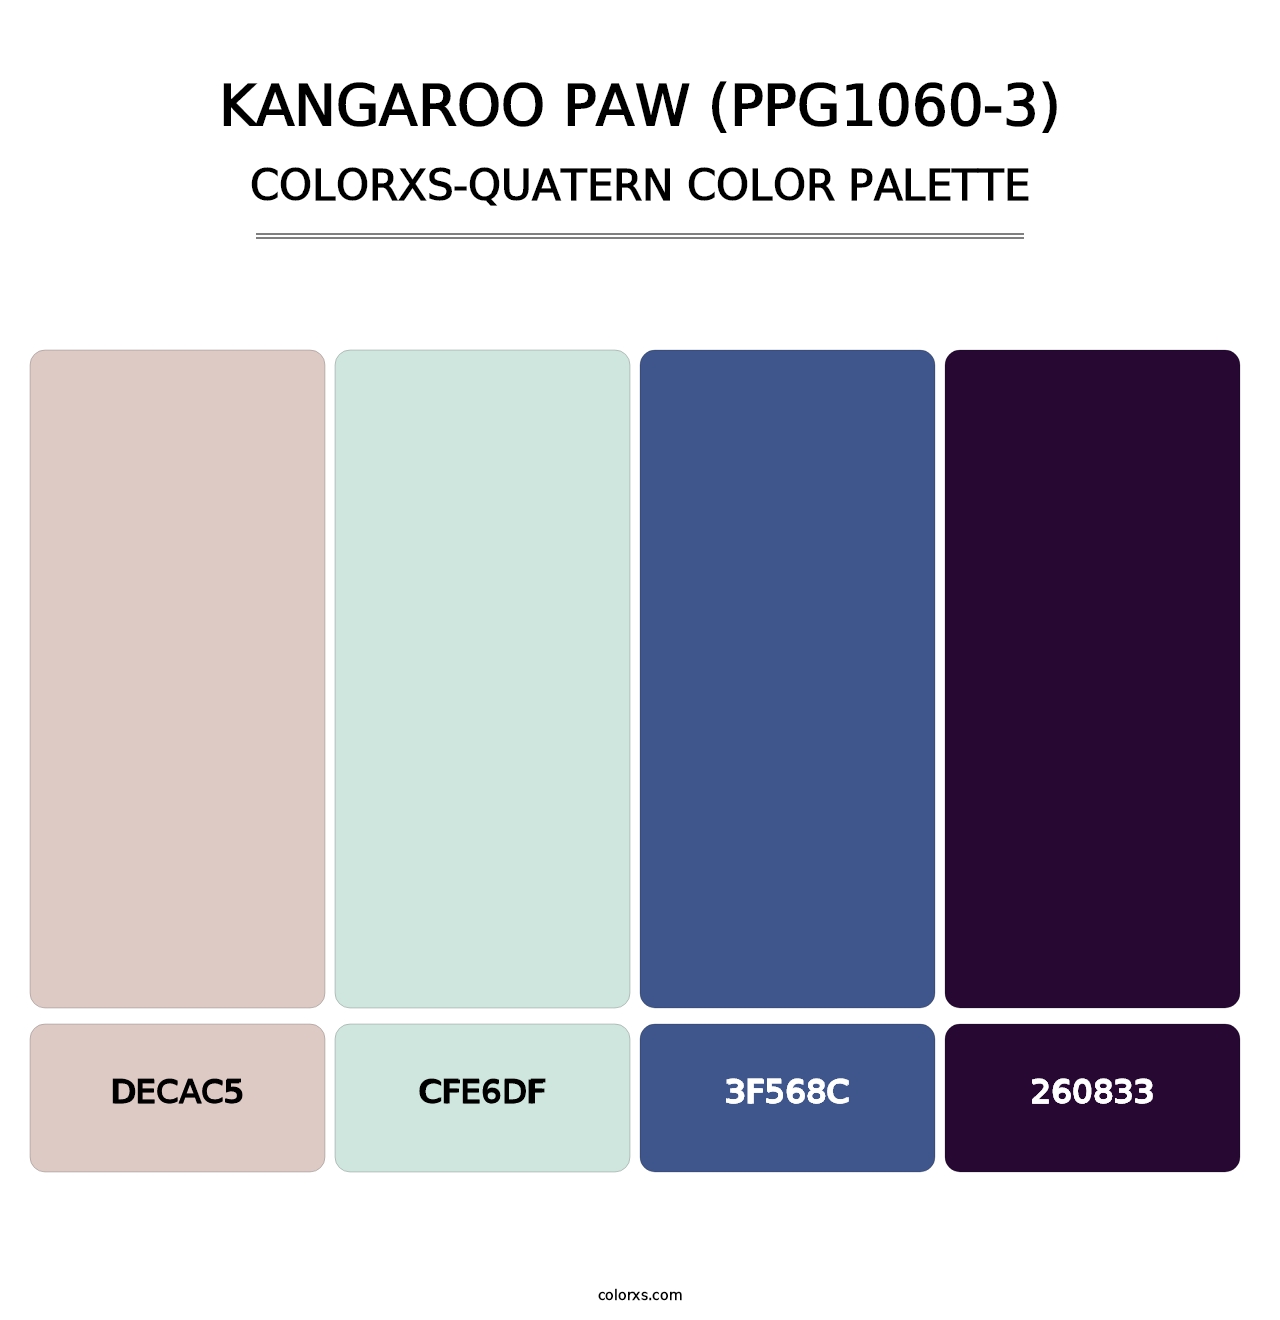 Kangaroo Paw (PPG1060-3) - Colorxs Quatern Palette